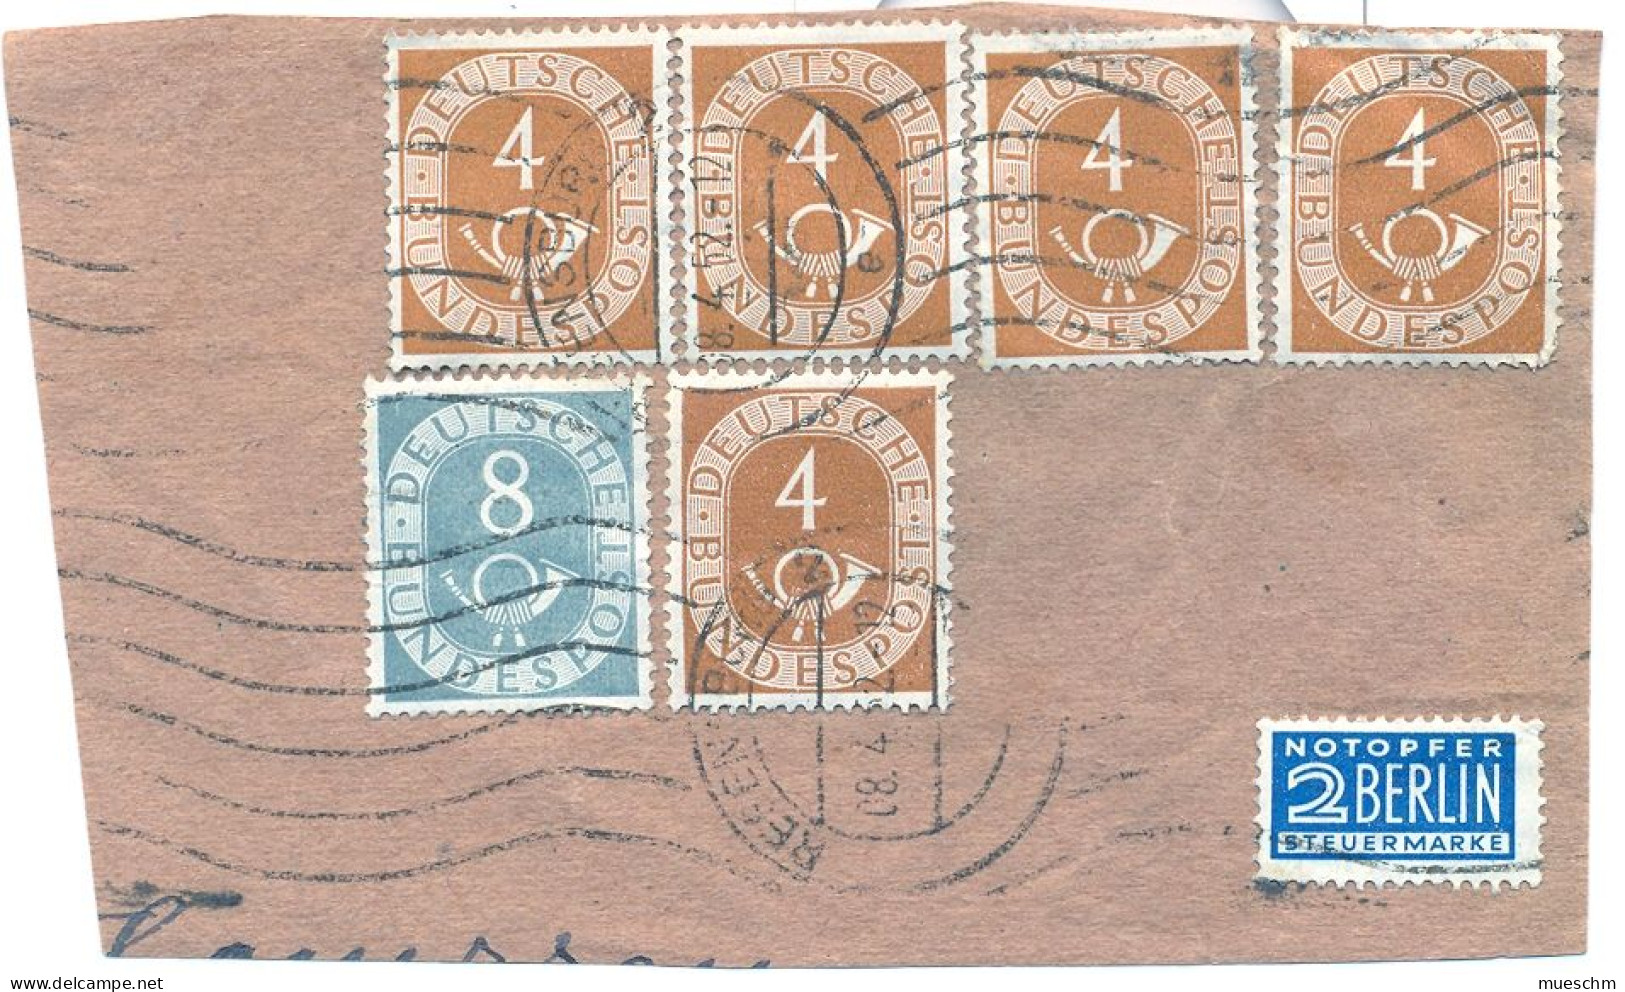 Bundesrepublik, 1952, Briefstück Mit 5xMi.124 (Posthorn 4Pfg.)+1xMi.Nr.127 (8Pfg.)+Notopfer Berlin (8473E) - Oblitérés